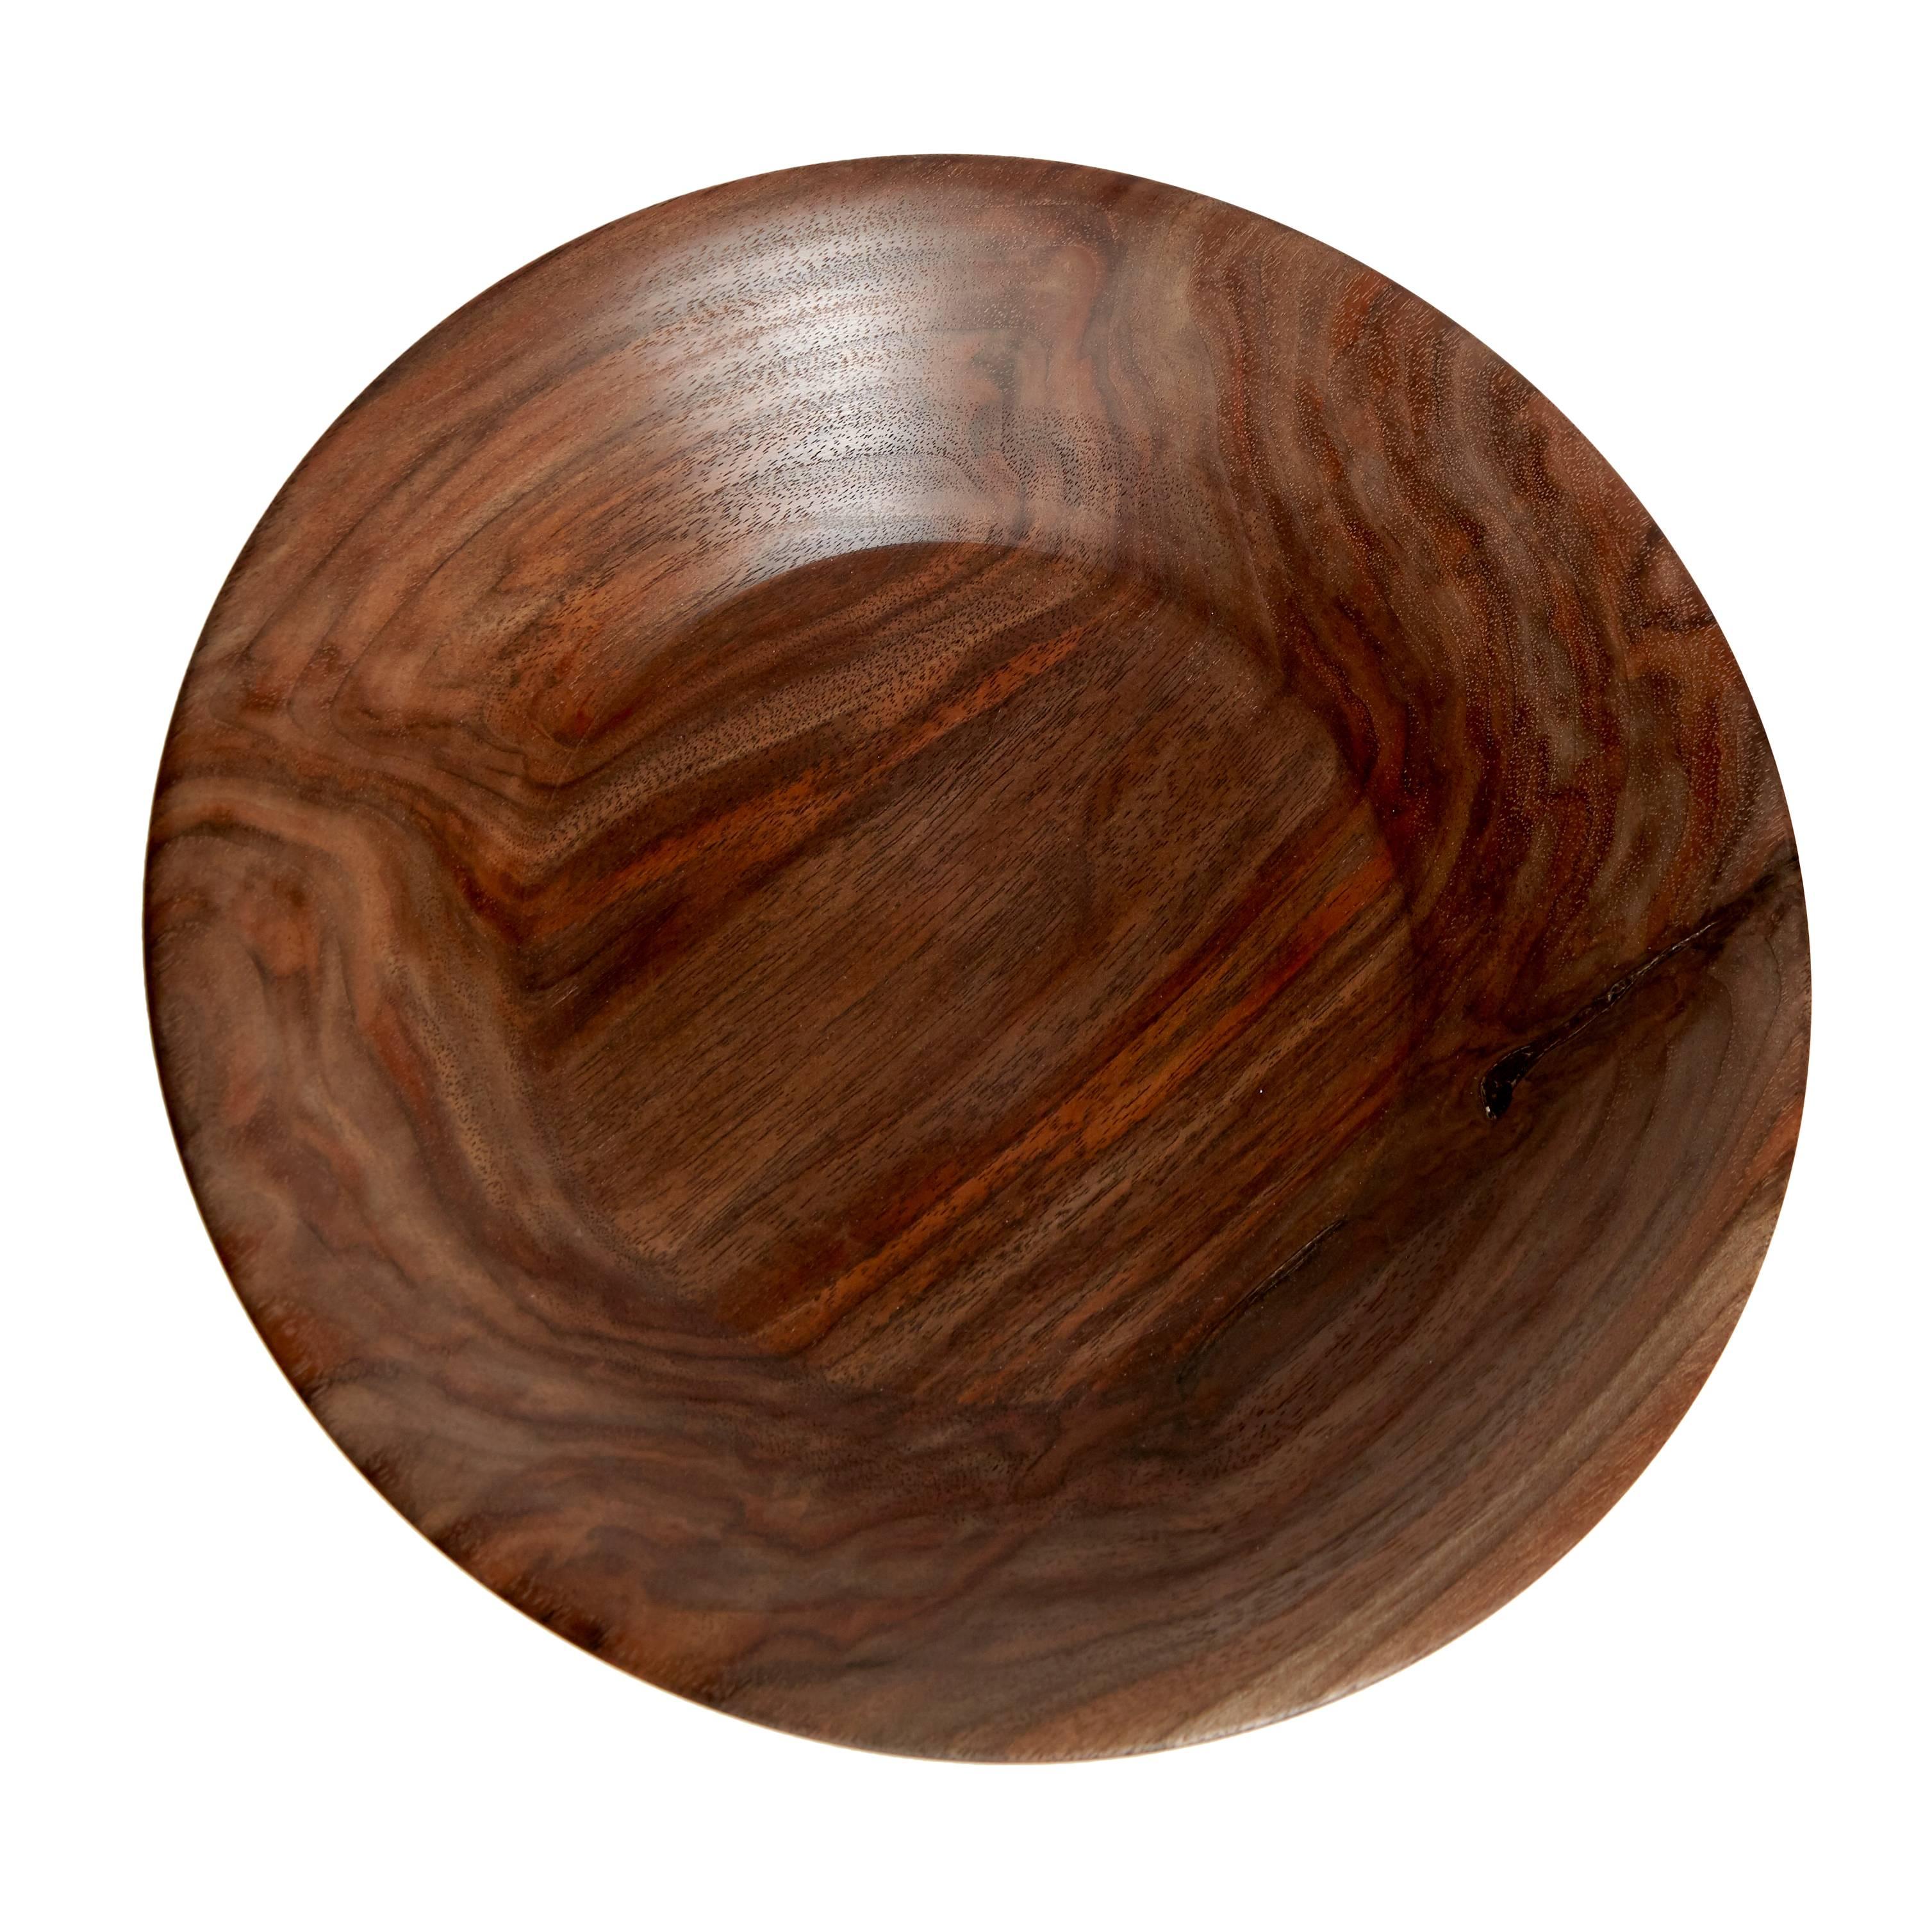 KLOTZWRK solid claro walnut lathe turned bowl.